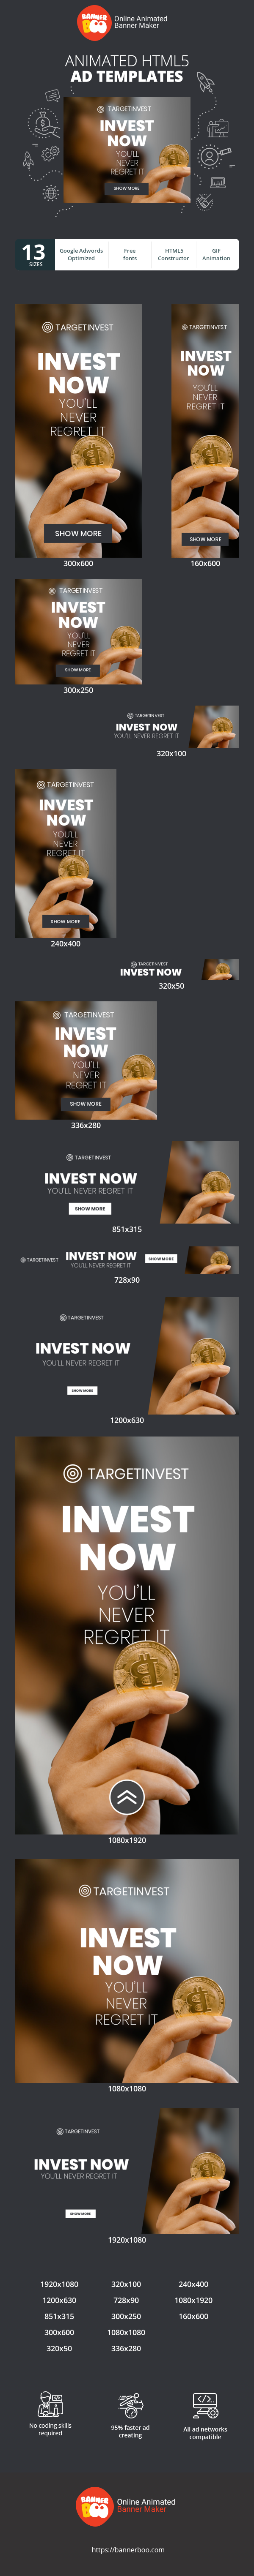 Szablon reklamy banerowej — Invest Now — You'll Never Regret It